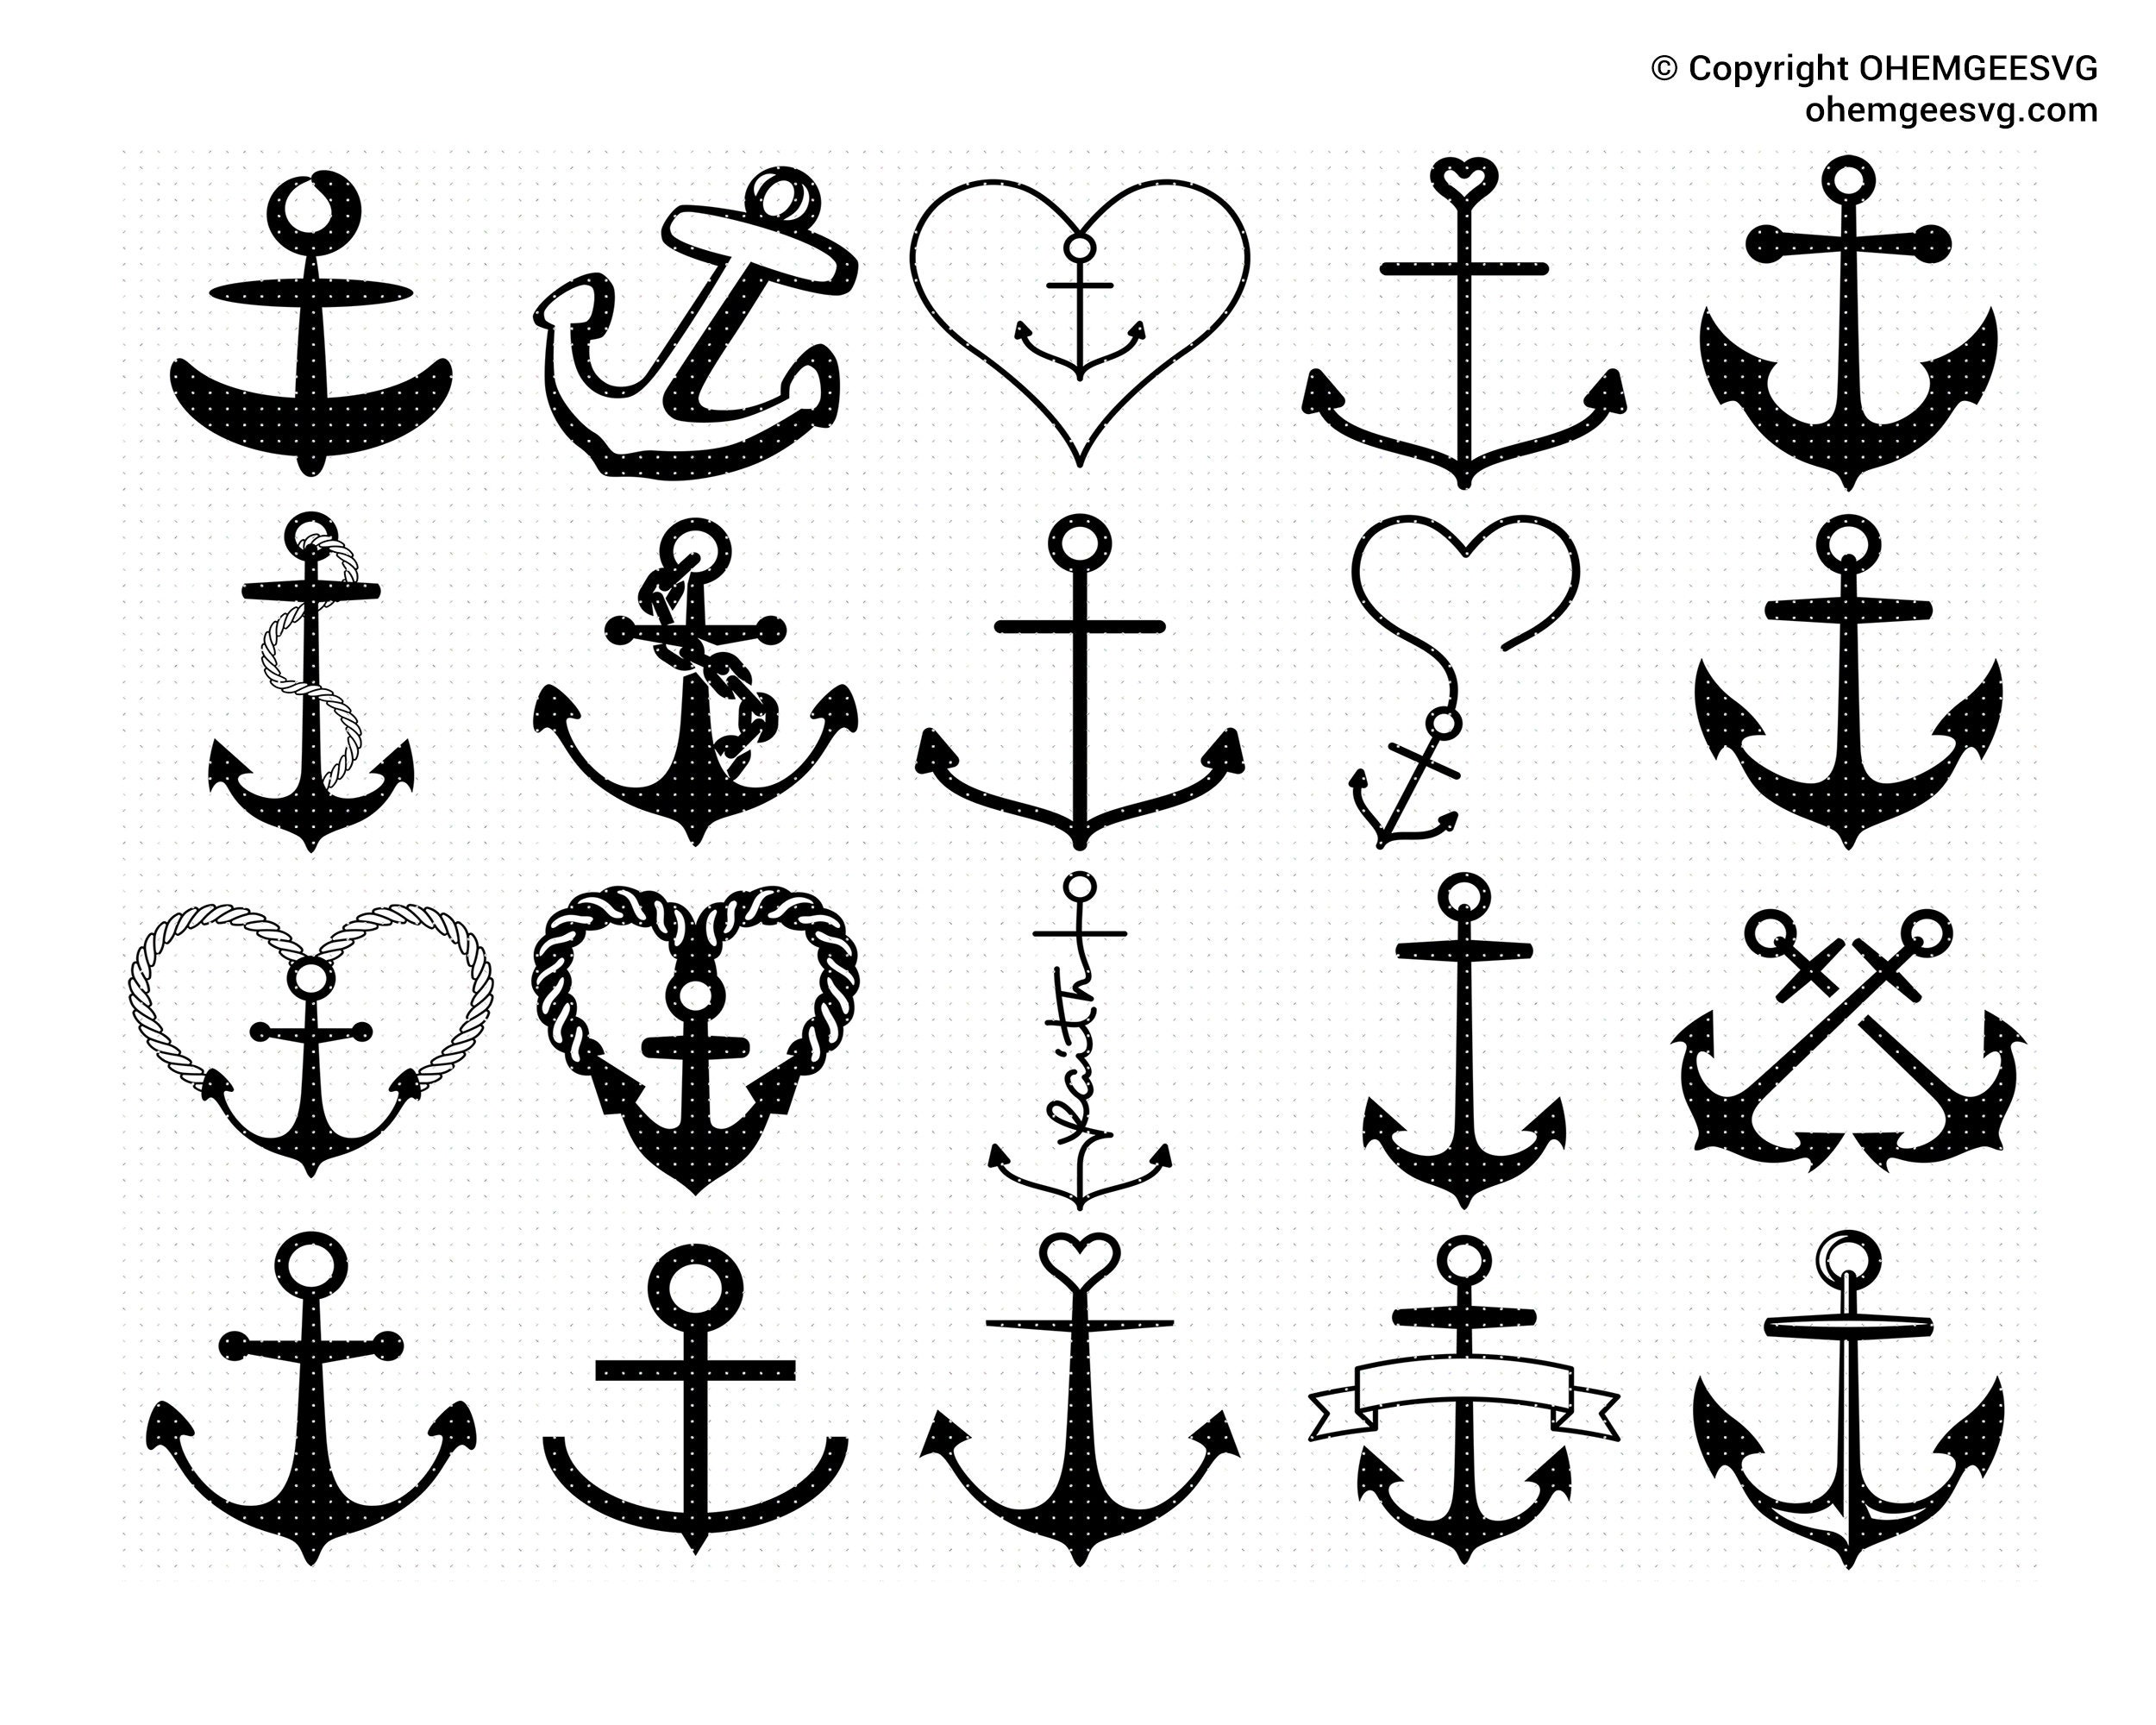 anchor heart tattoo